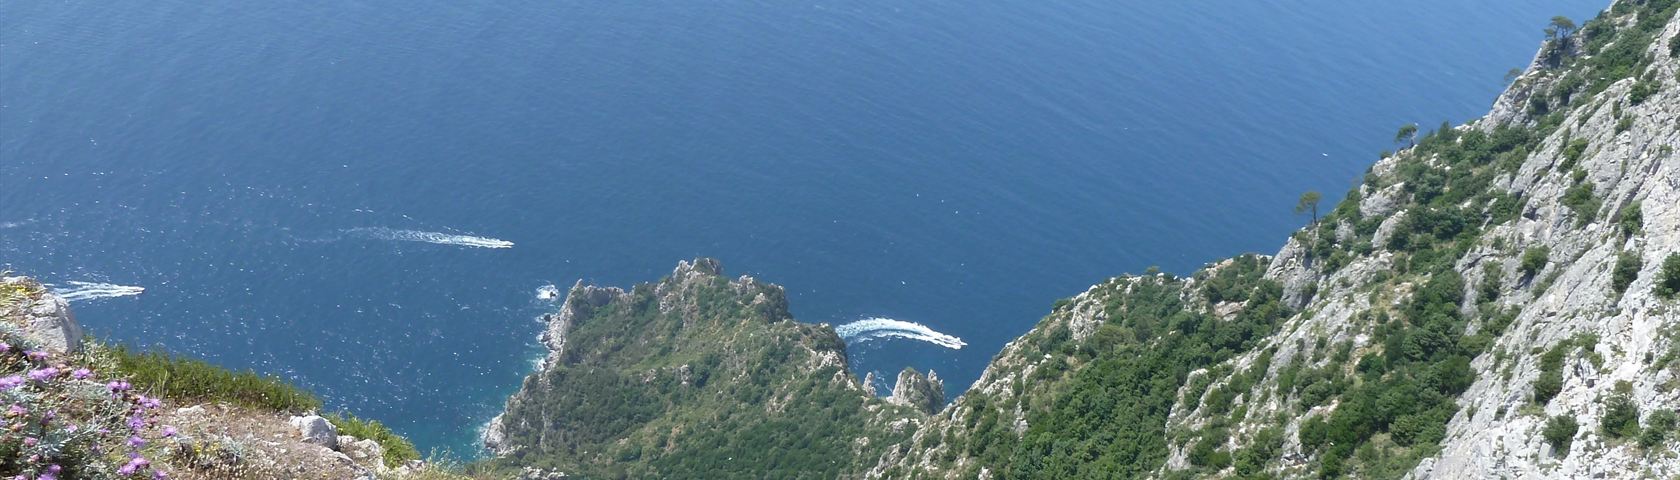 Sloping Sides of Capri